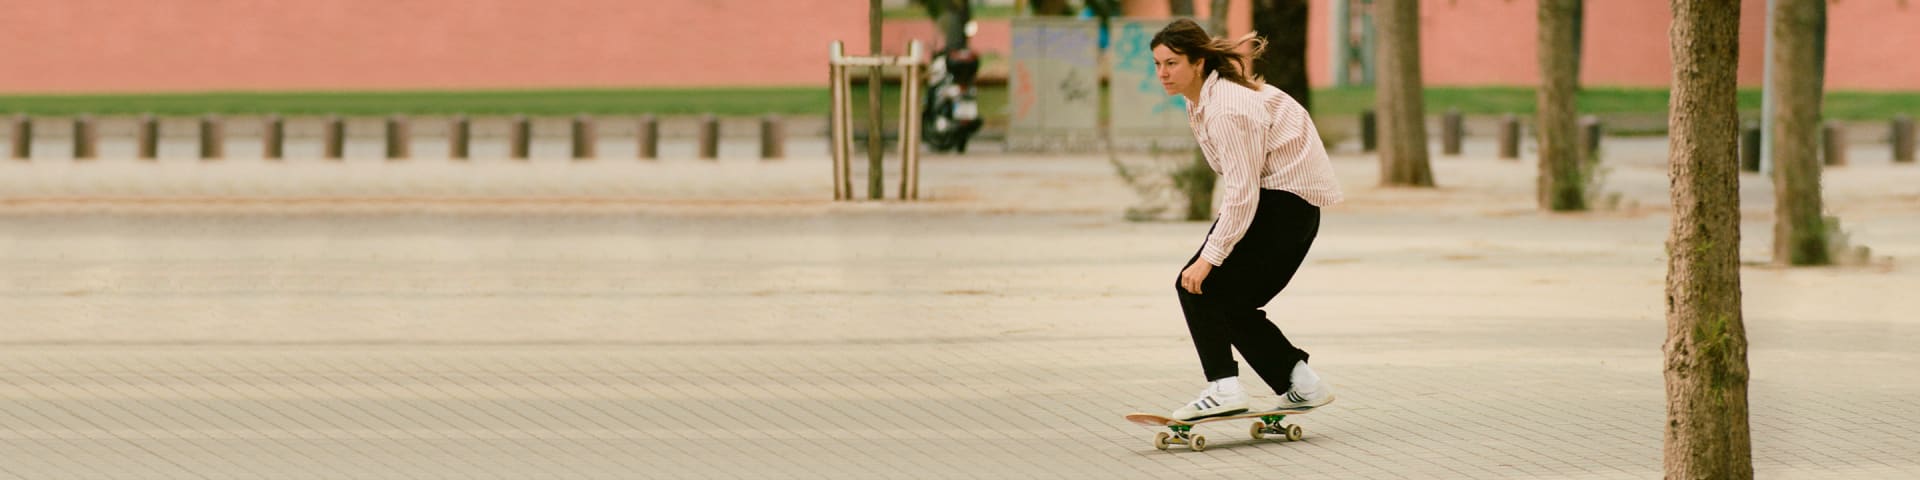 Kalmerend Giftig Stadscentrum adidas Women's Skateboarding